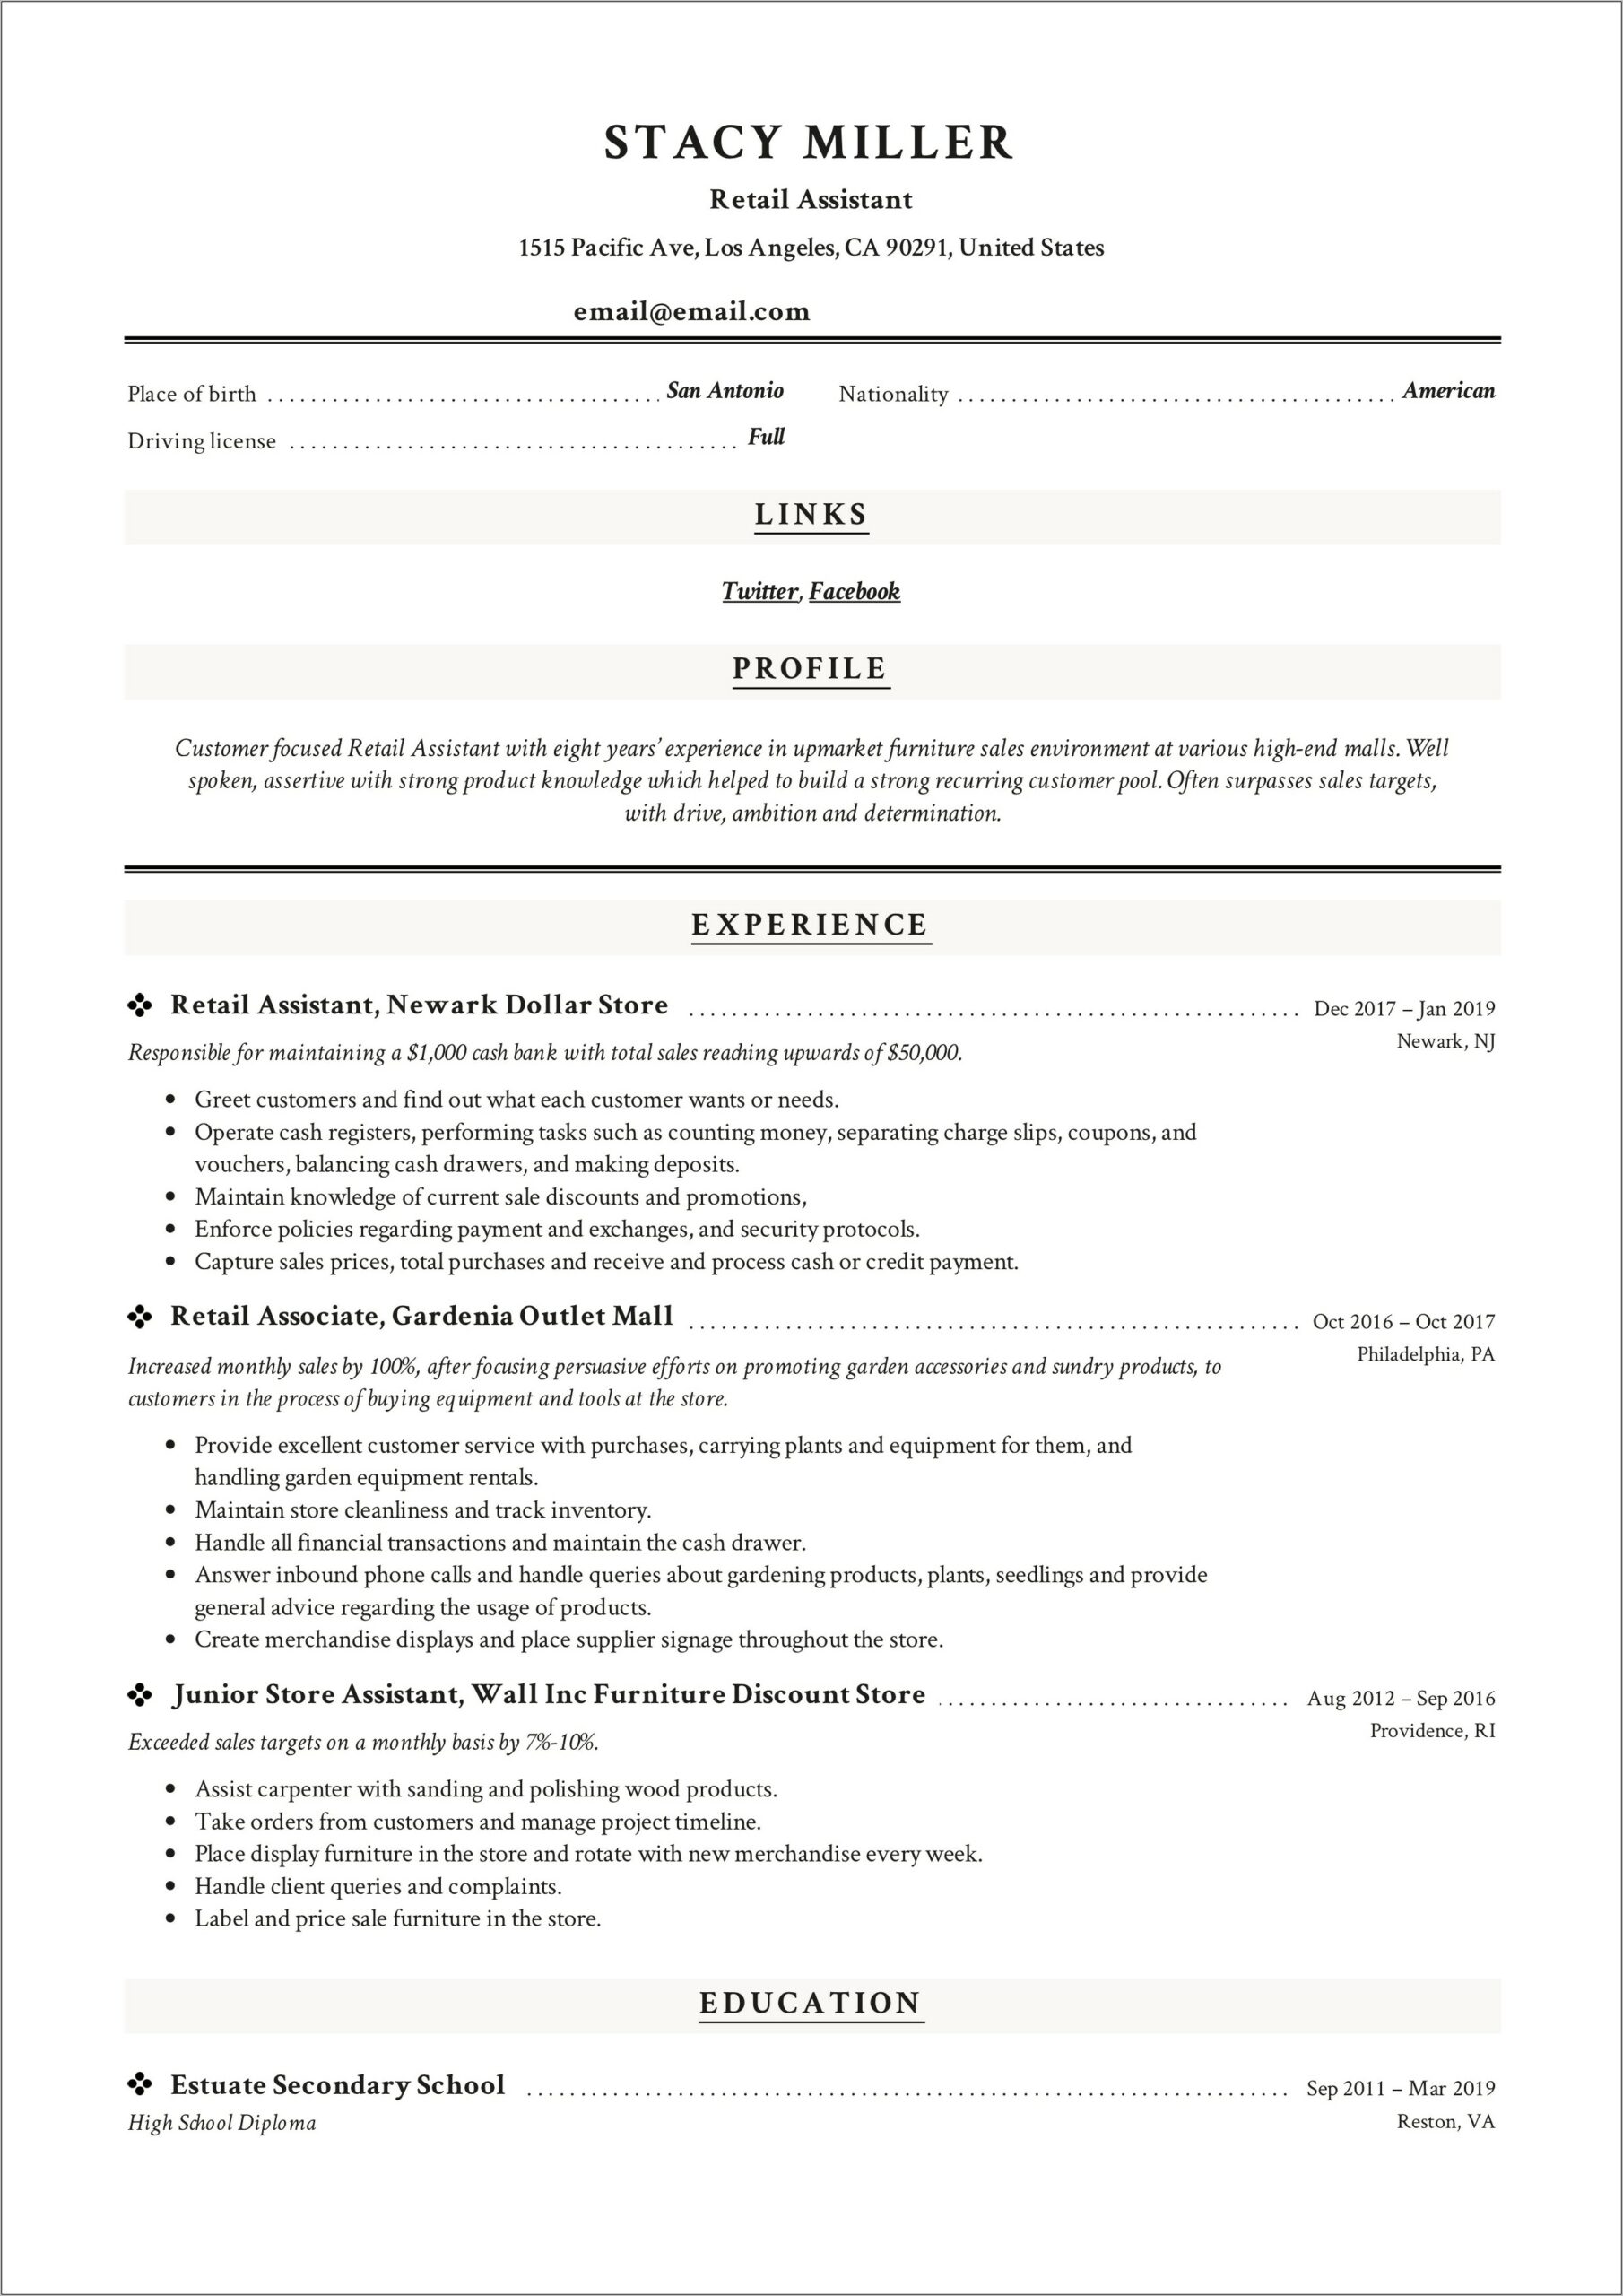 Retail Assistant Job Sample Resume